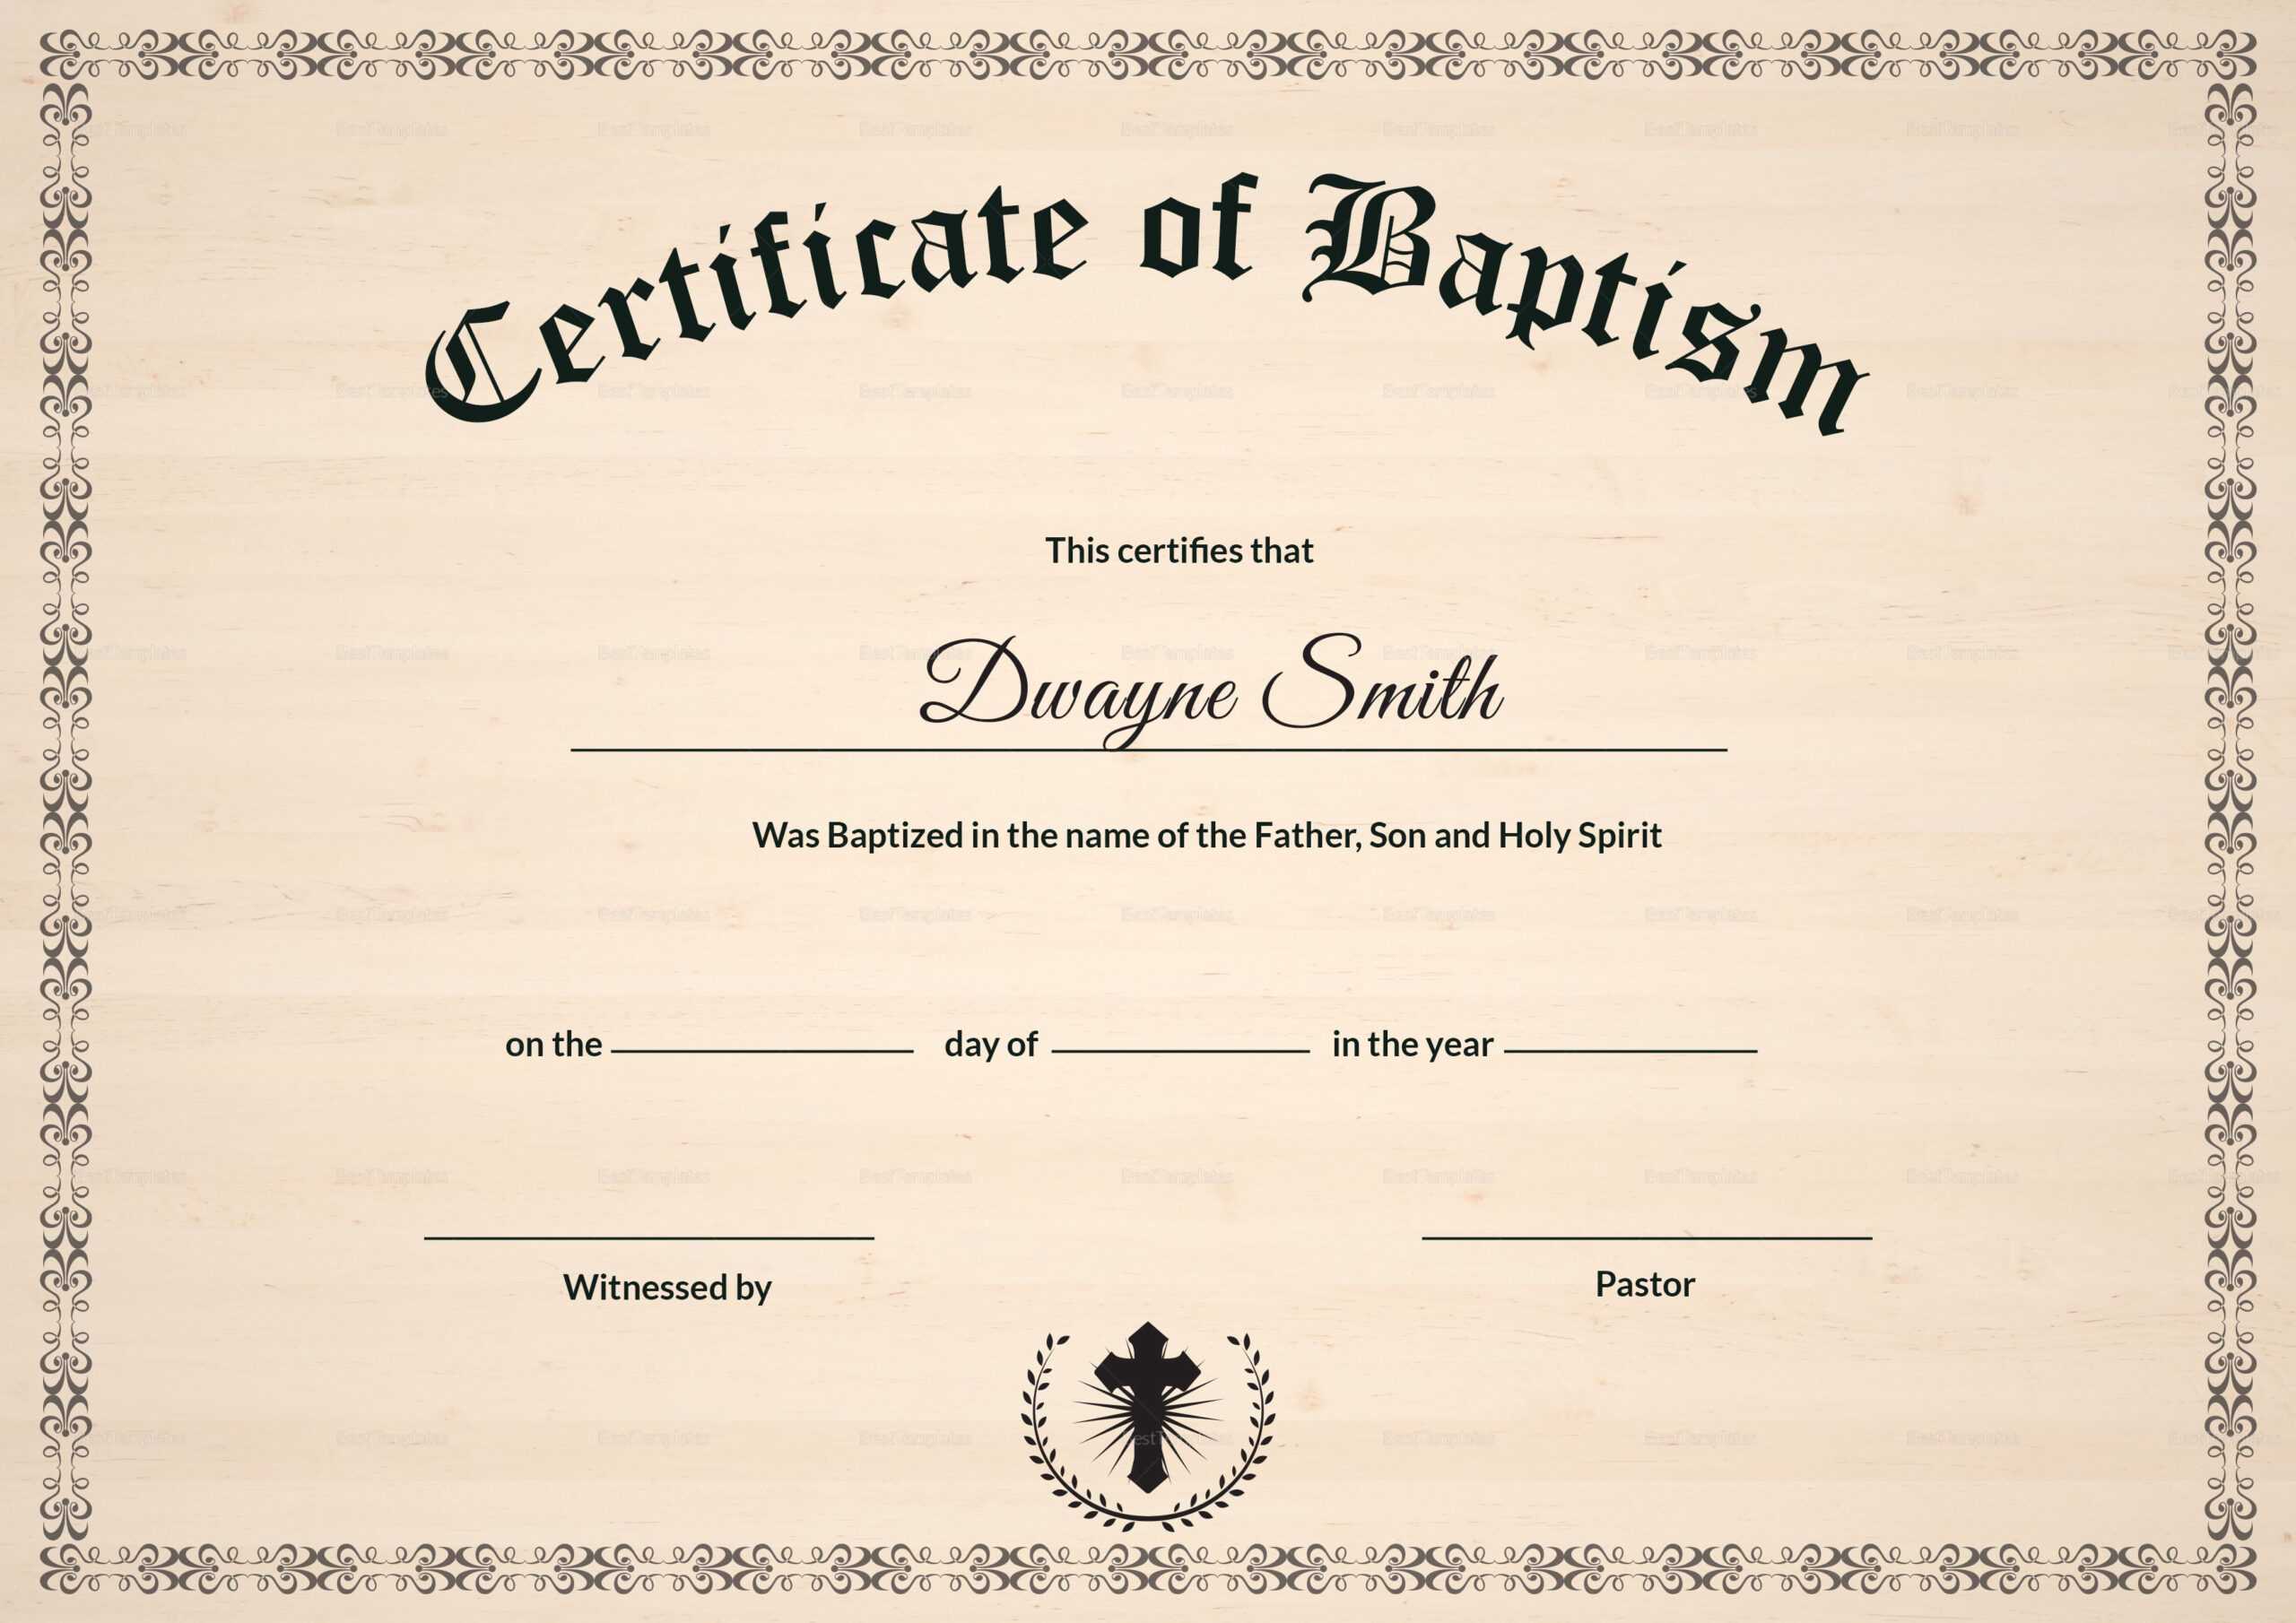 001 Certificate Of Baptism Template Unique Ideas Catholic In Christian Baptism Certificate Template